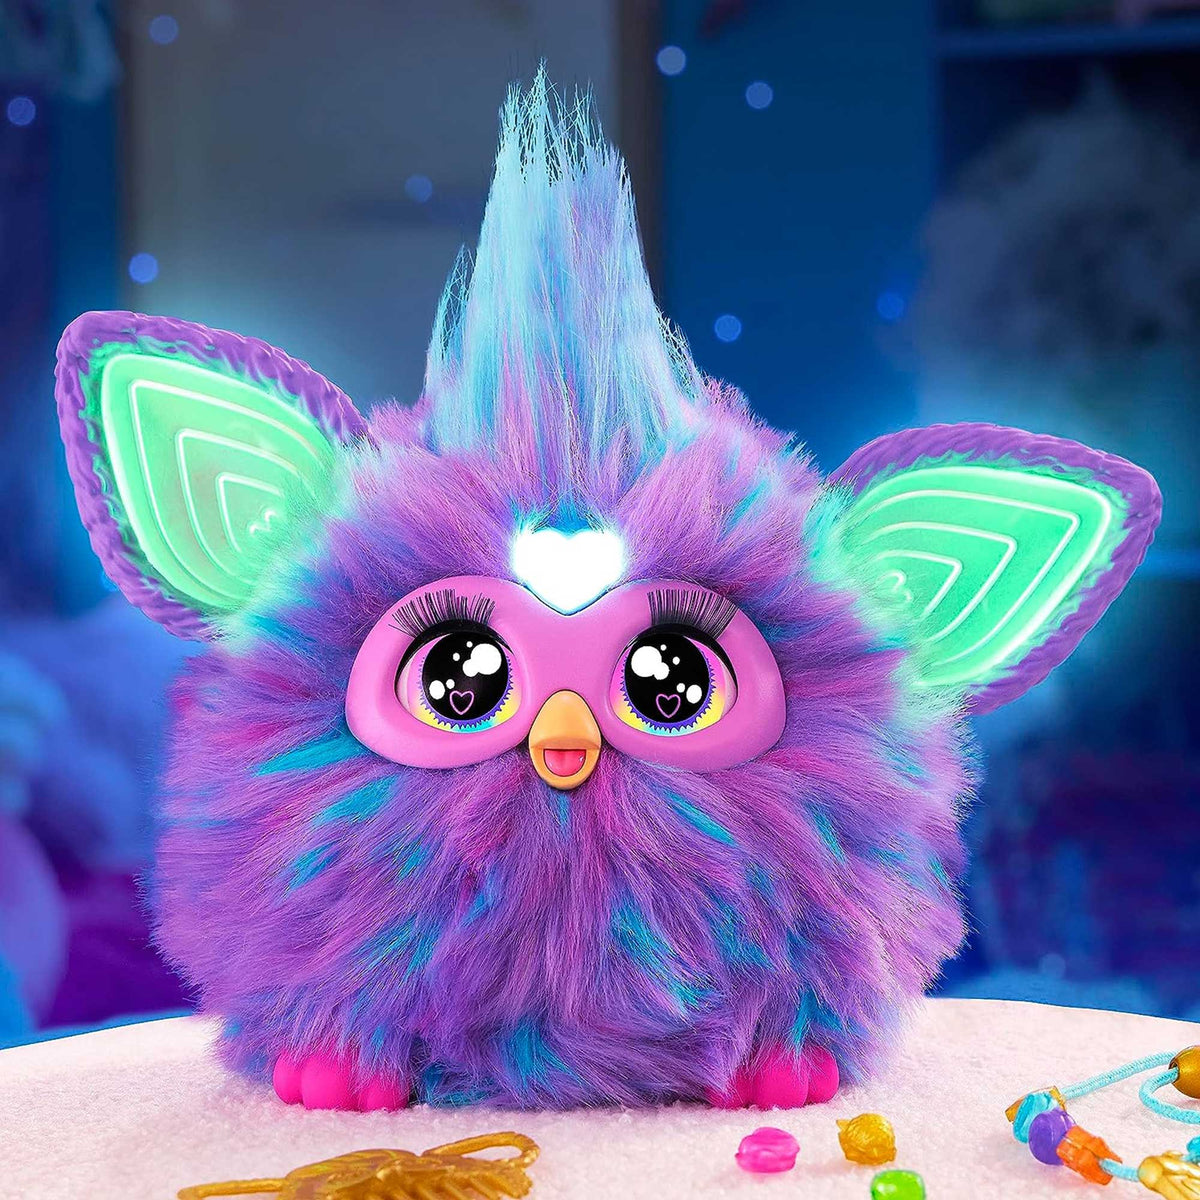 Furby Purple Interactive Toy